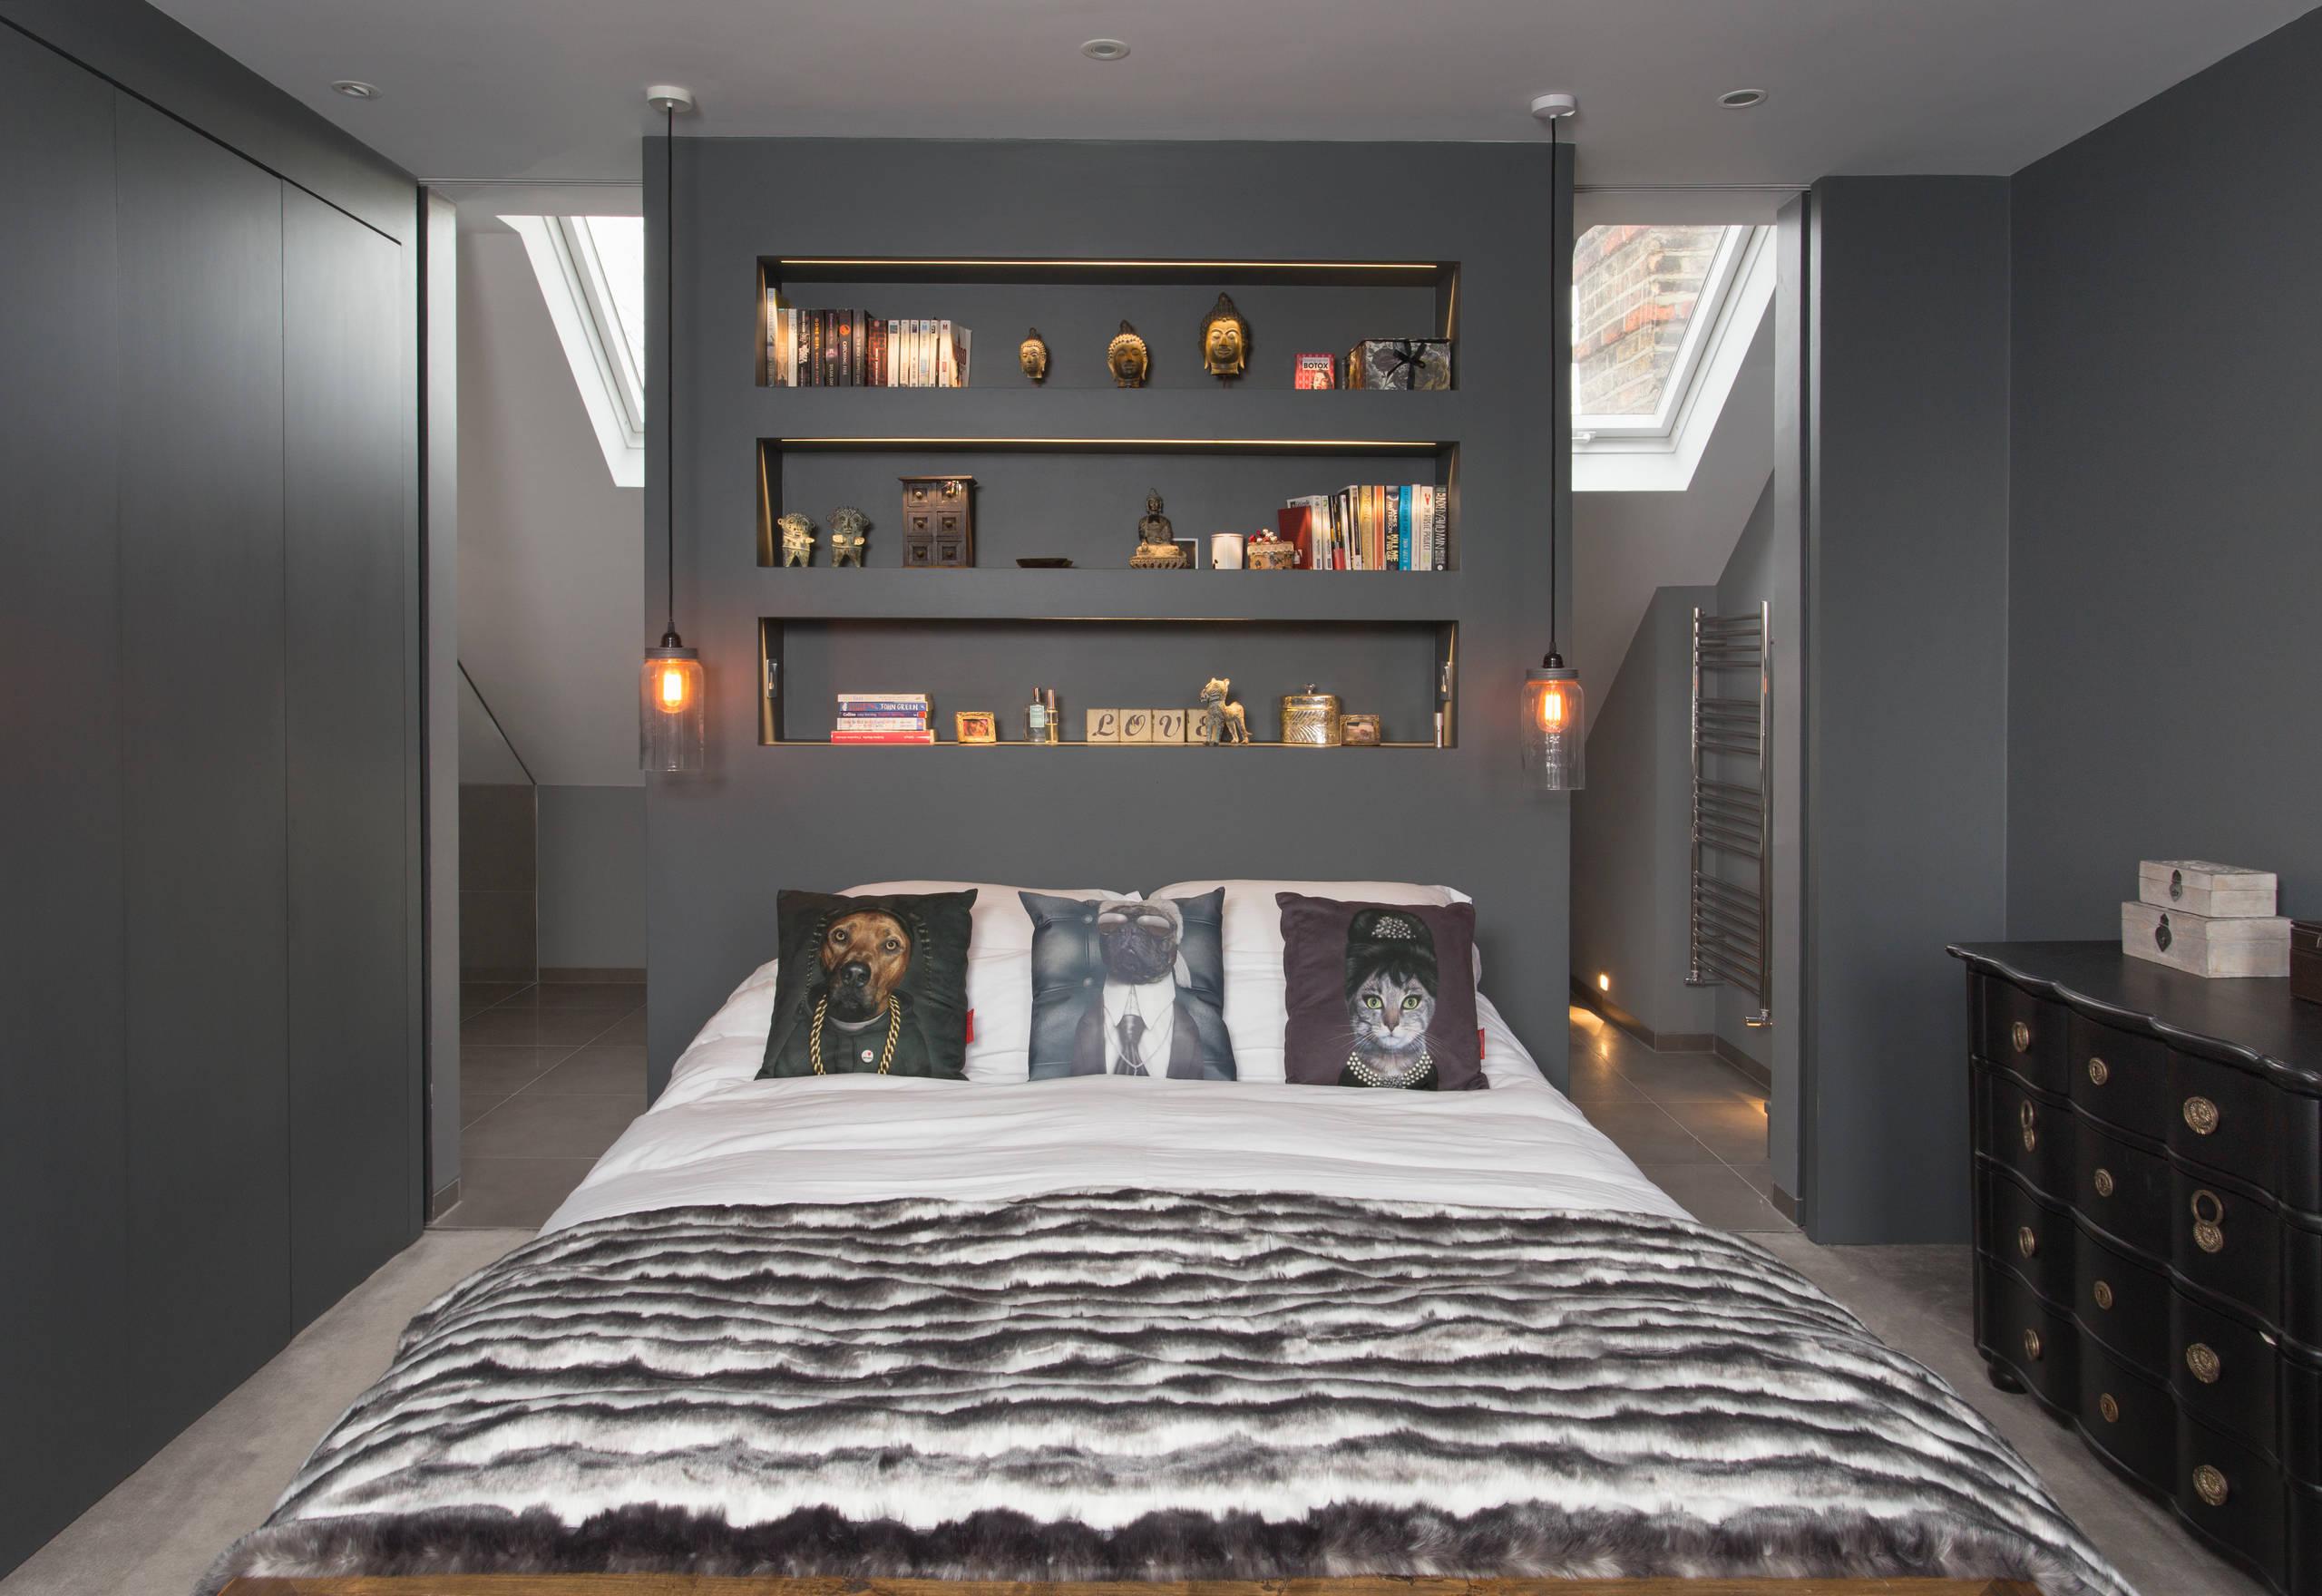 Master Bedroom Storage Ideas